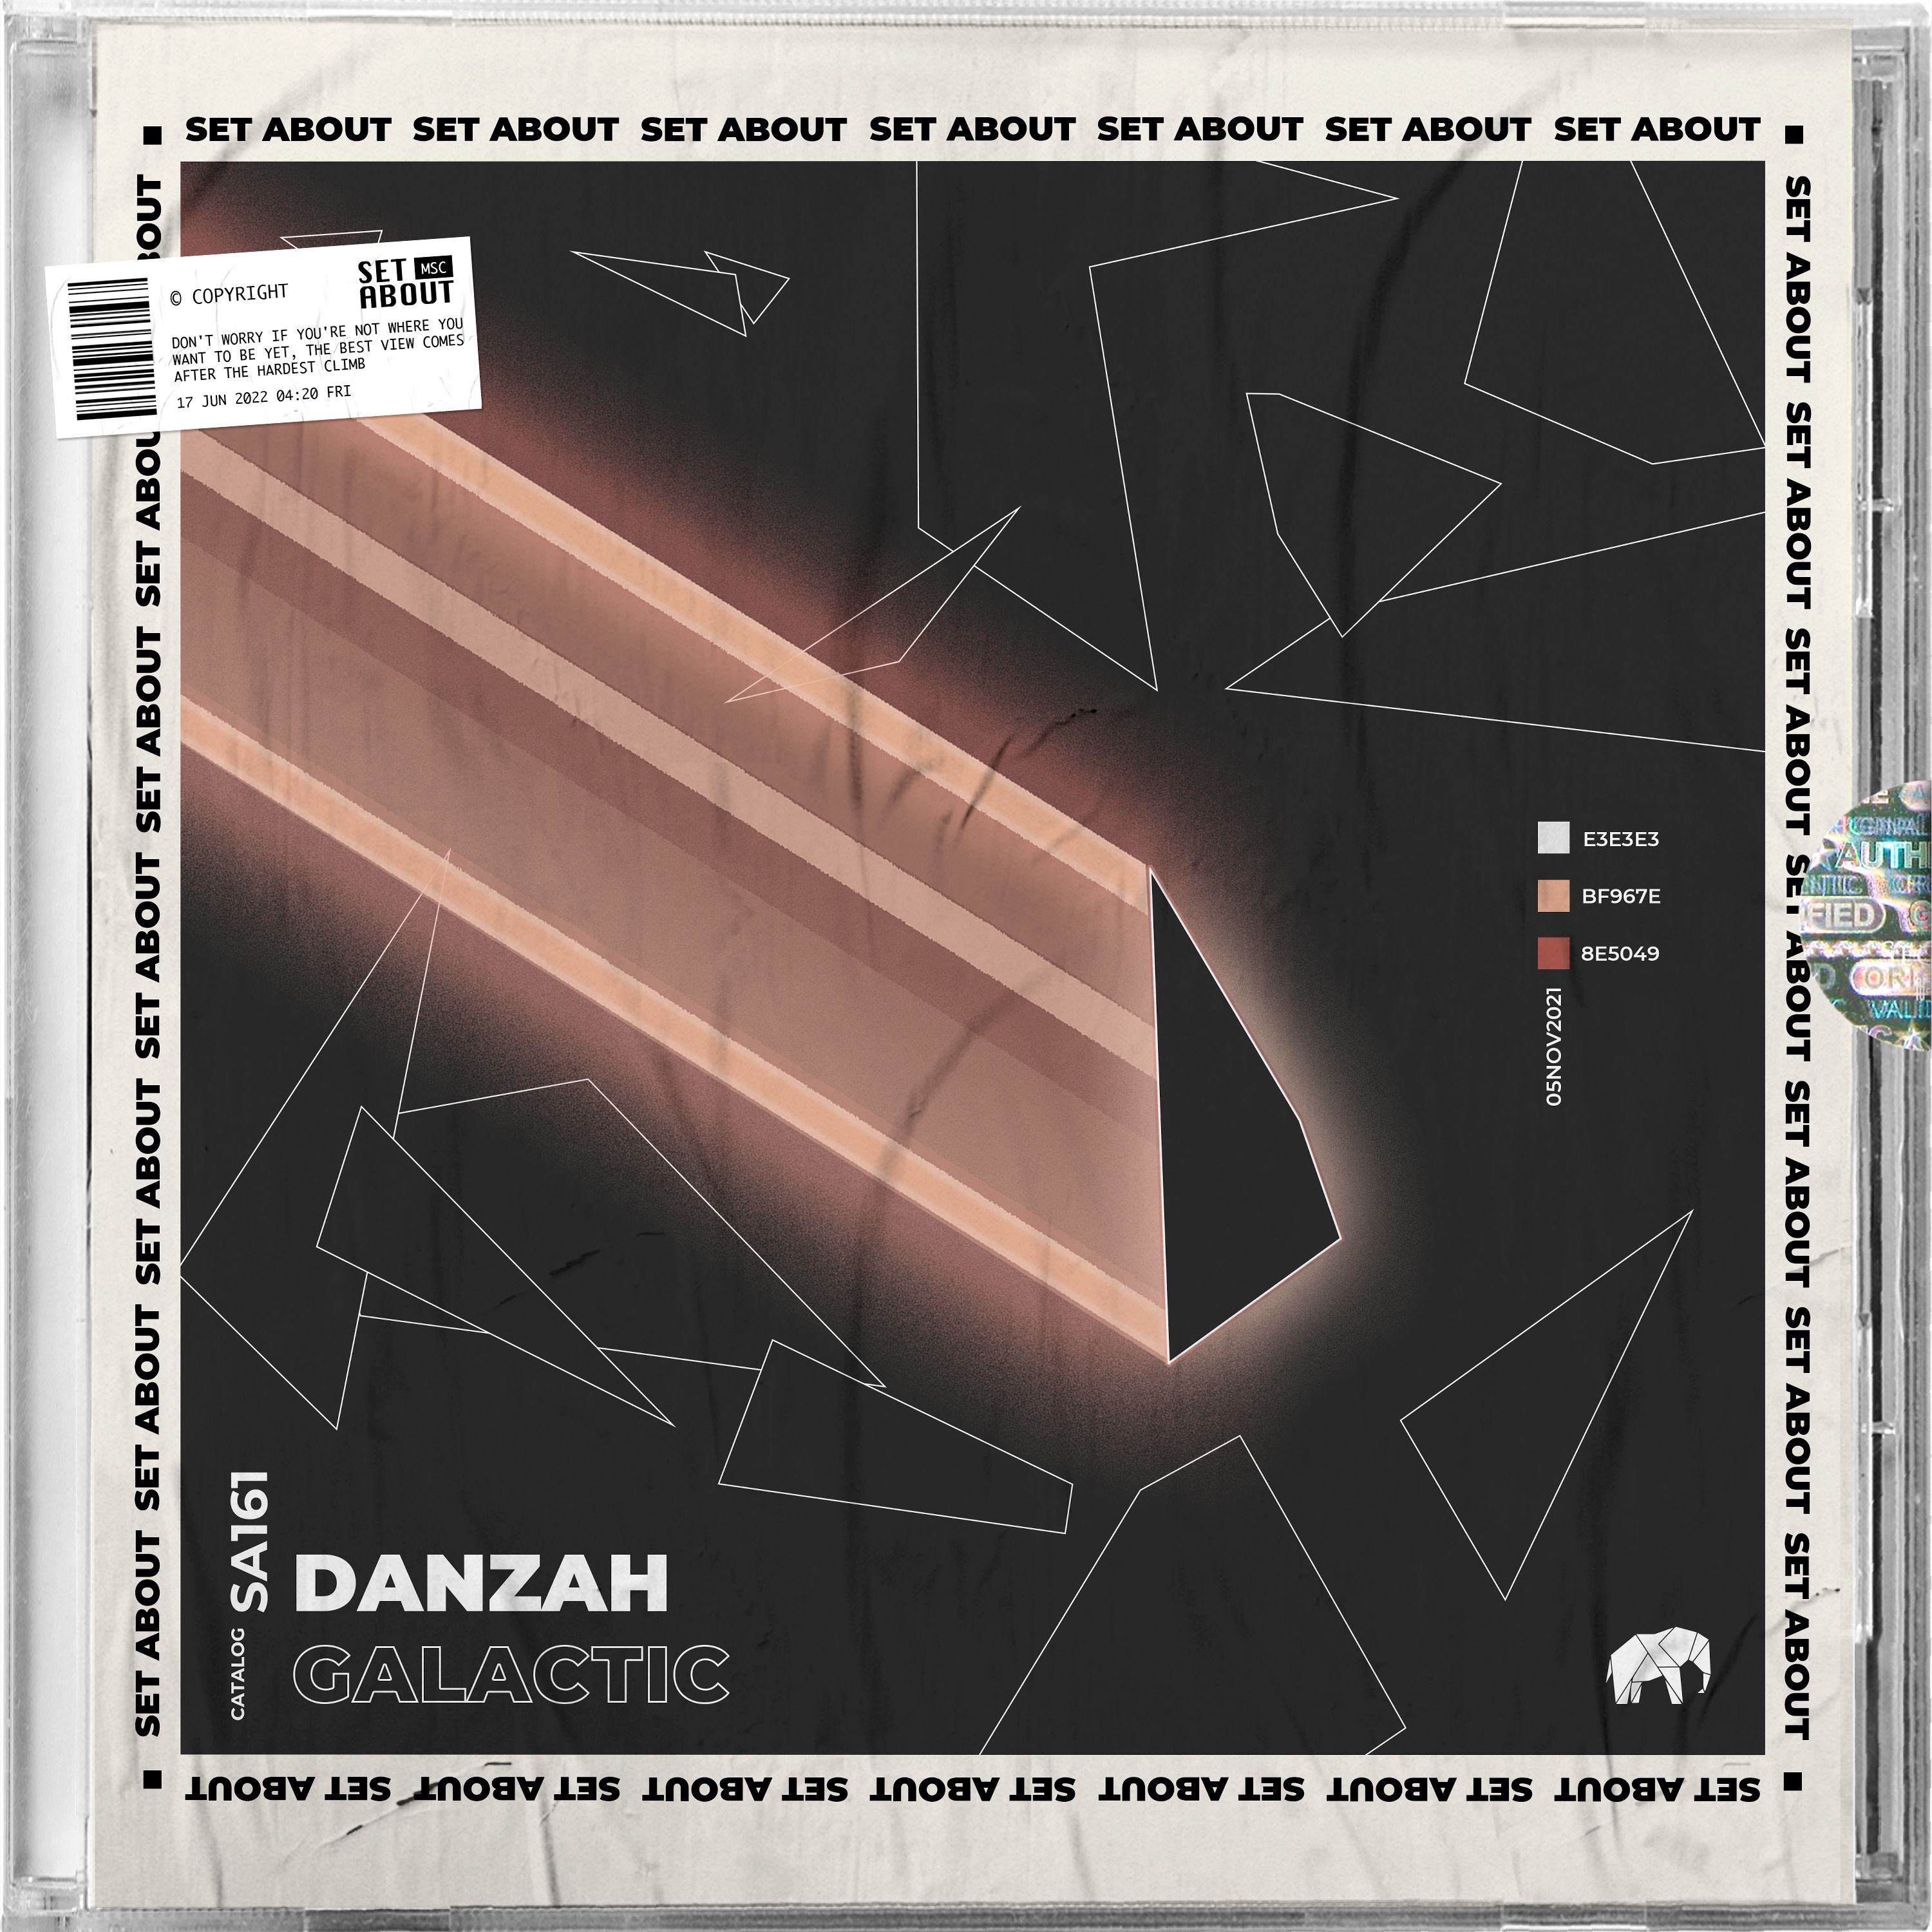 डाउनलोड करा PREMIERE: DANZAH - Galactic (Original Mix) [Set About]